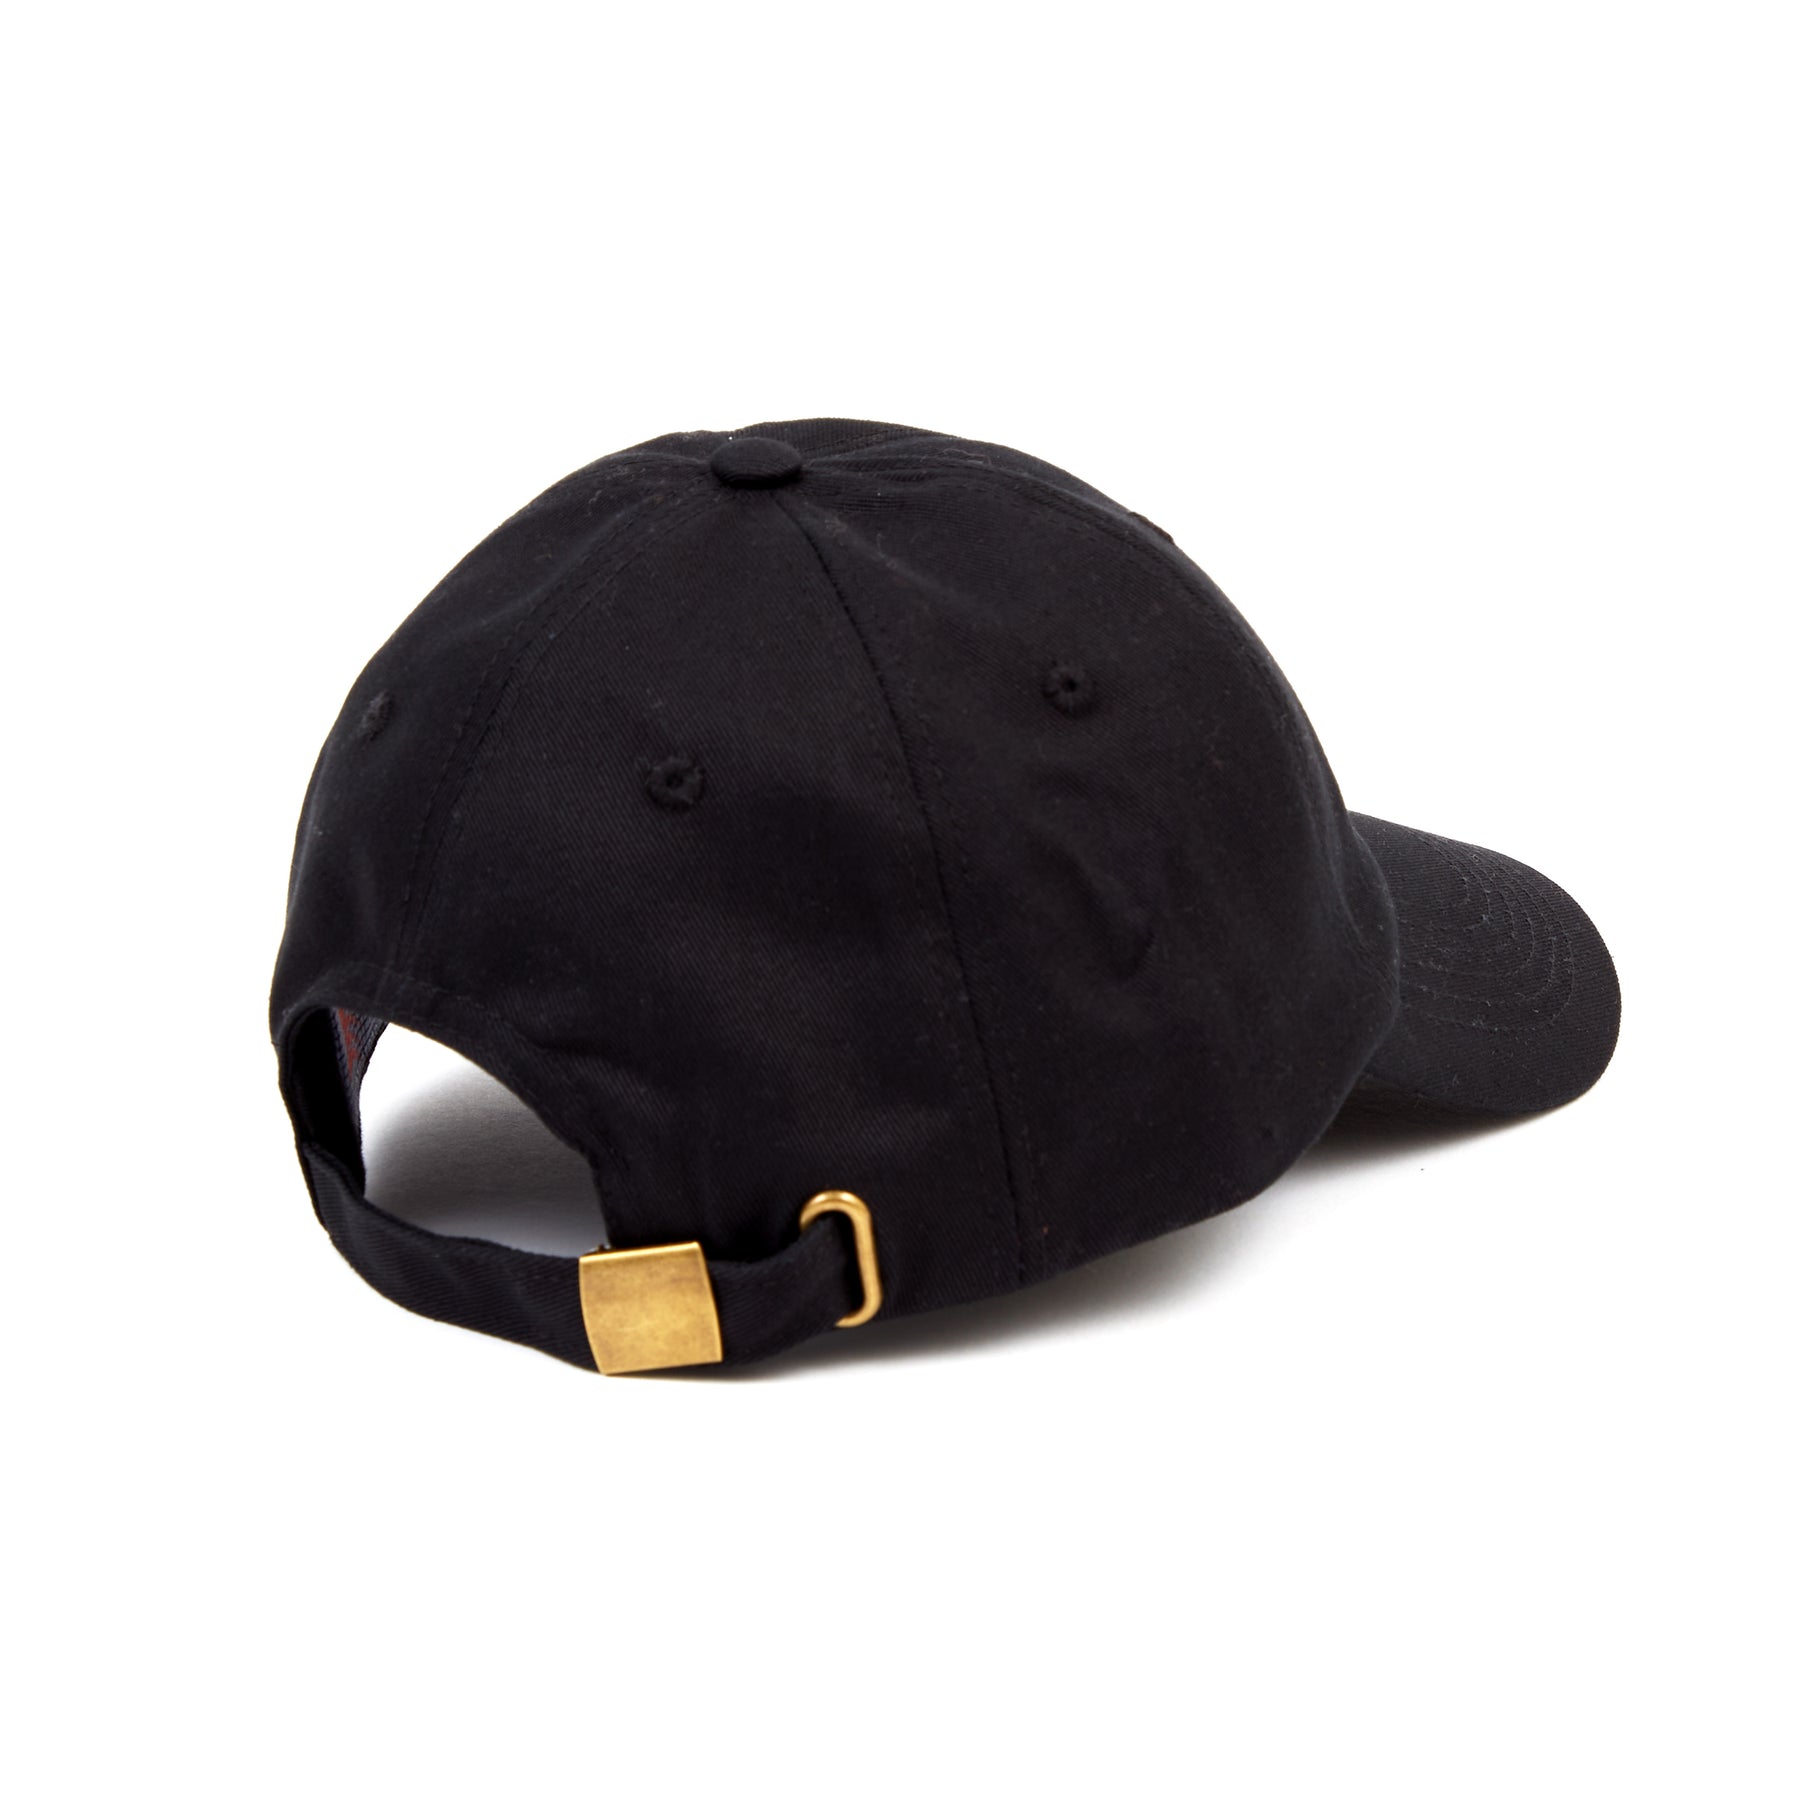 BRONZE56 Birates Hat Black 02